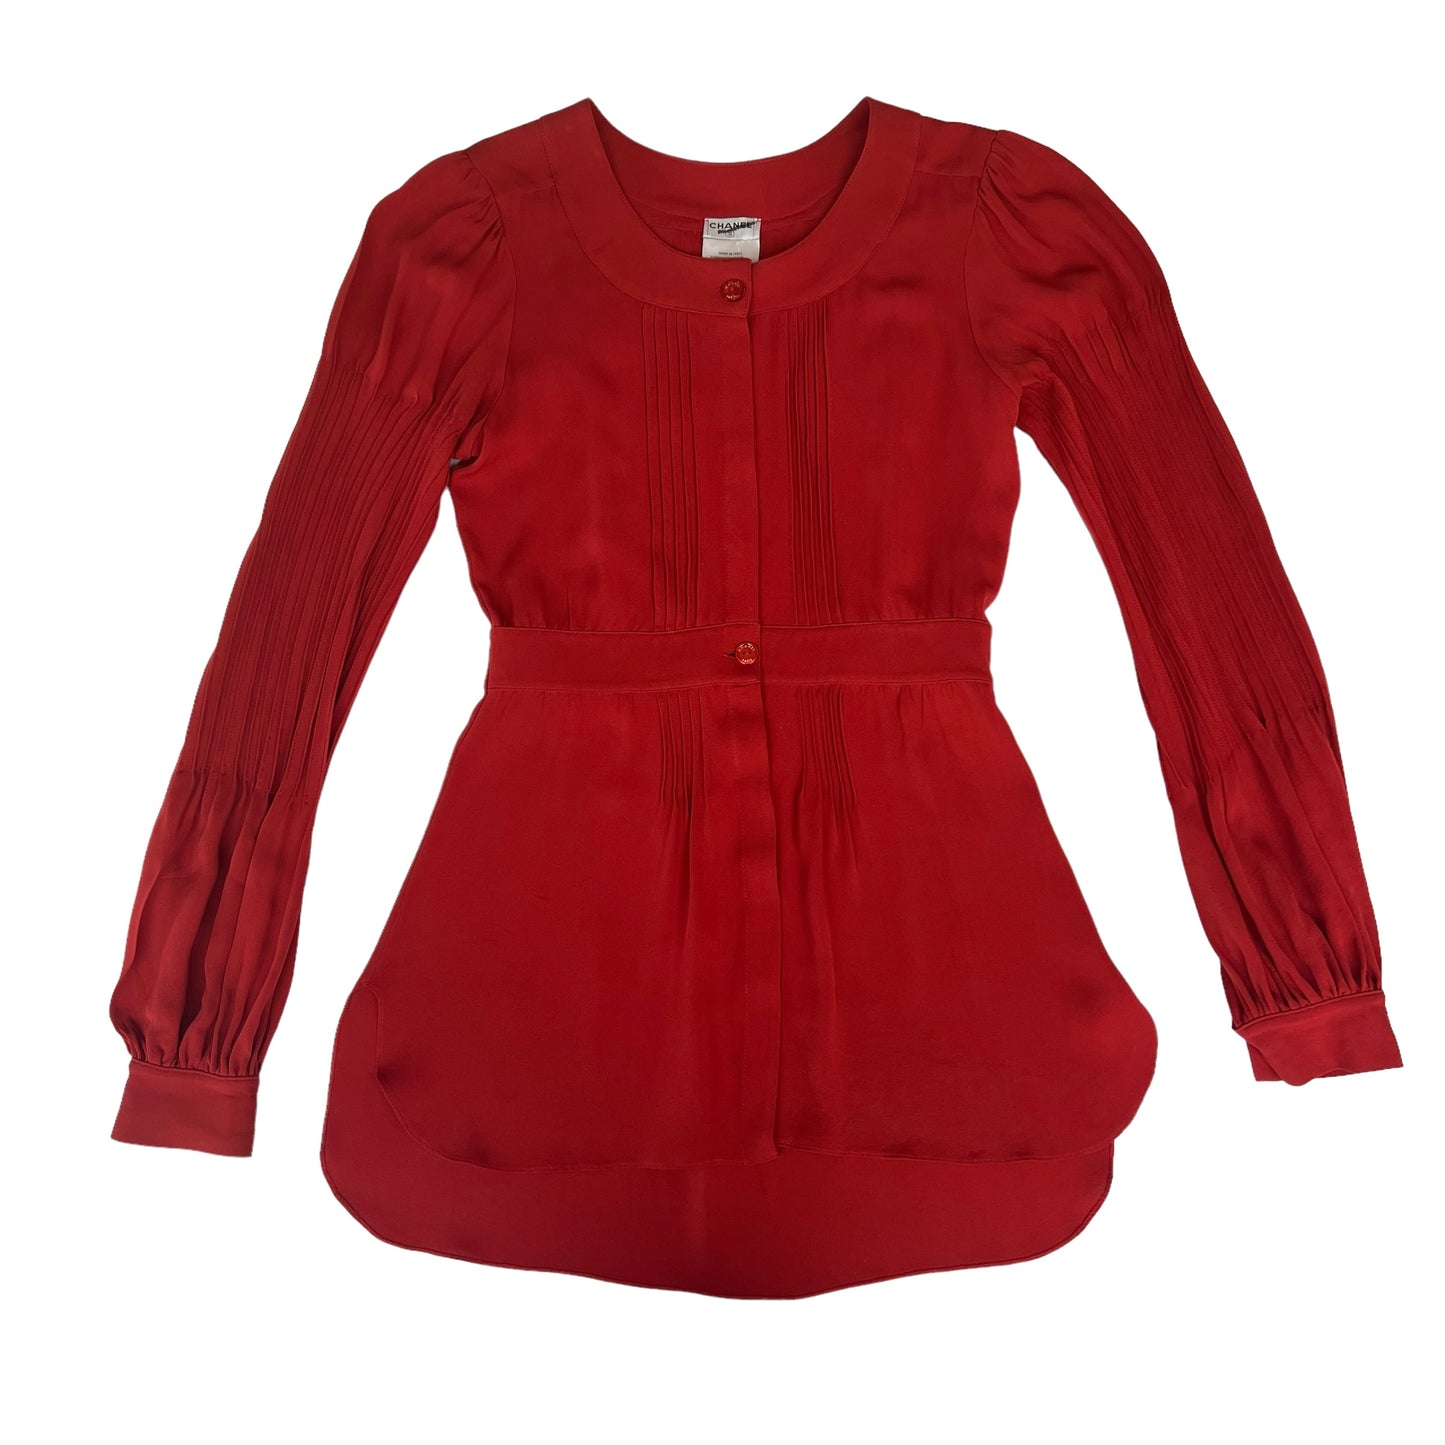 Vintage Red Silk Shirt - S